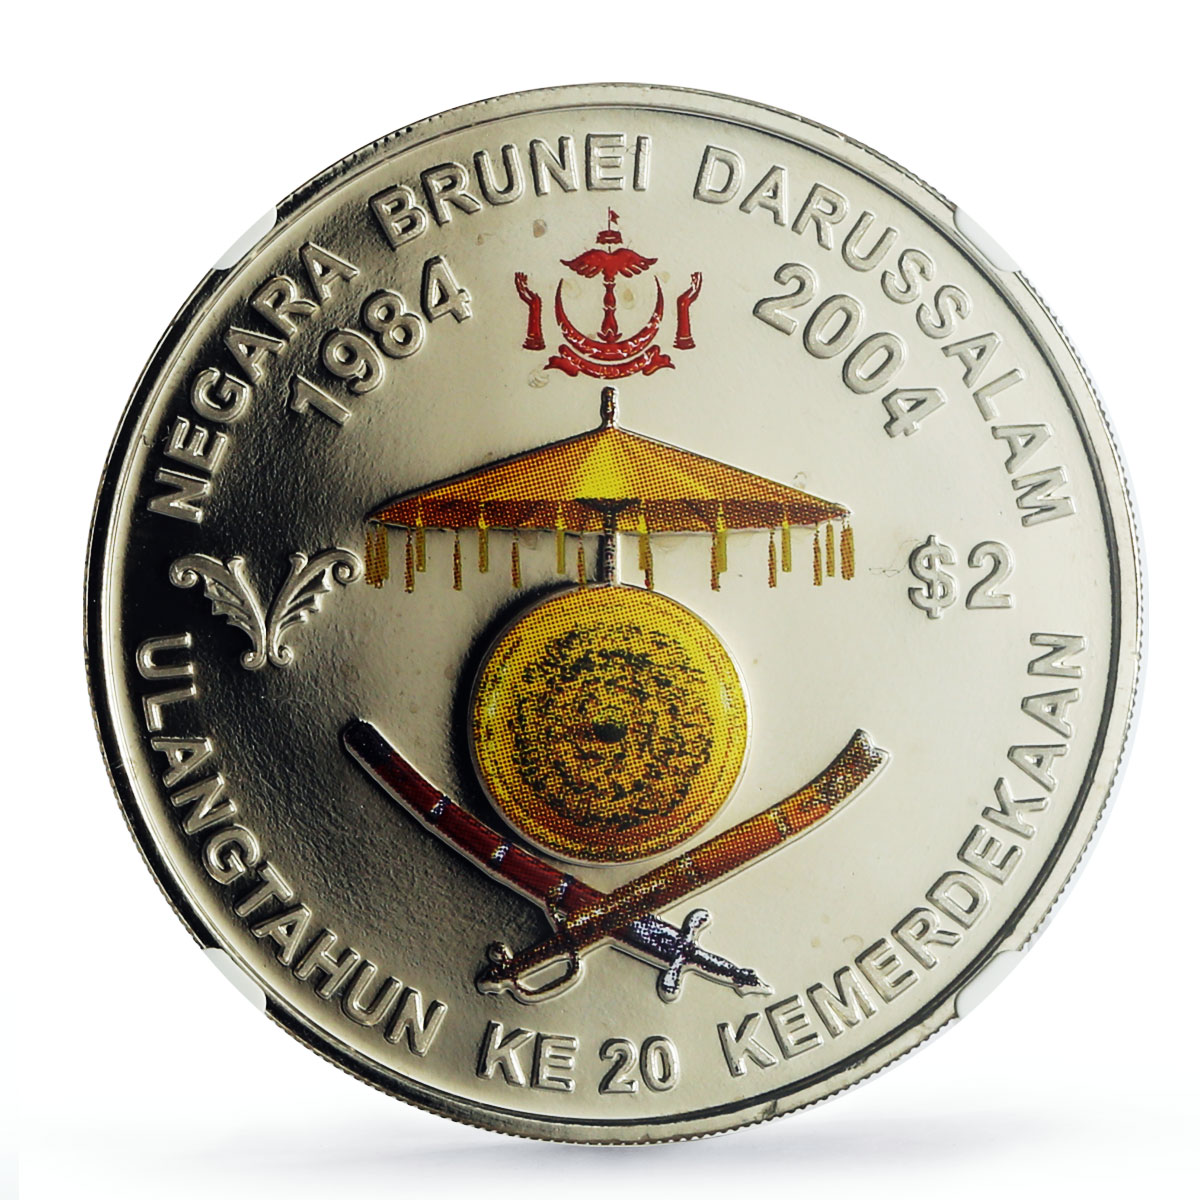 Brunei 2 dollars Independence Sultan Bolkiah Politics PF68 NGC CuNi coin 2004